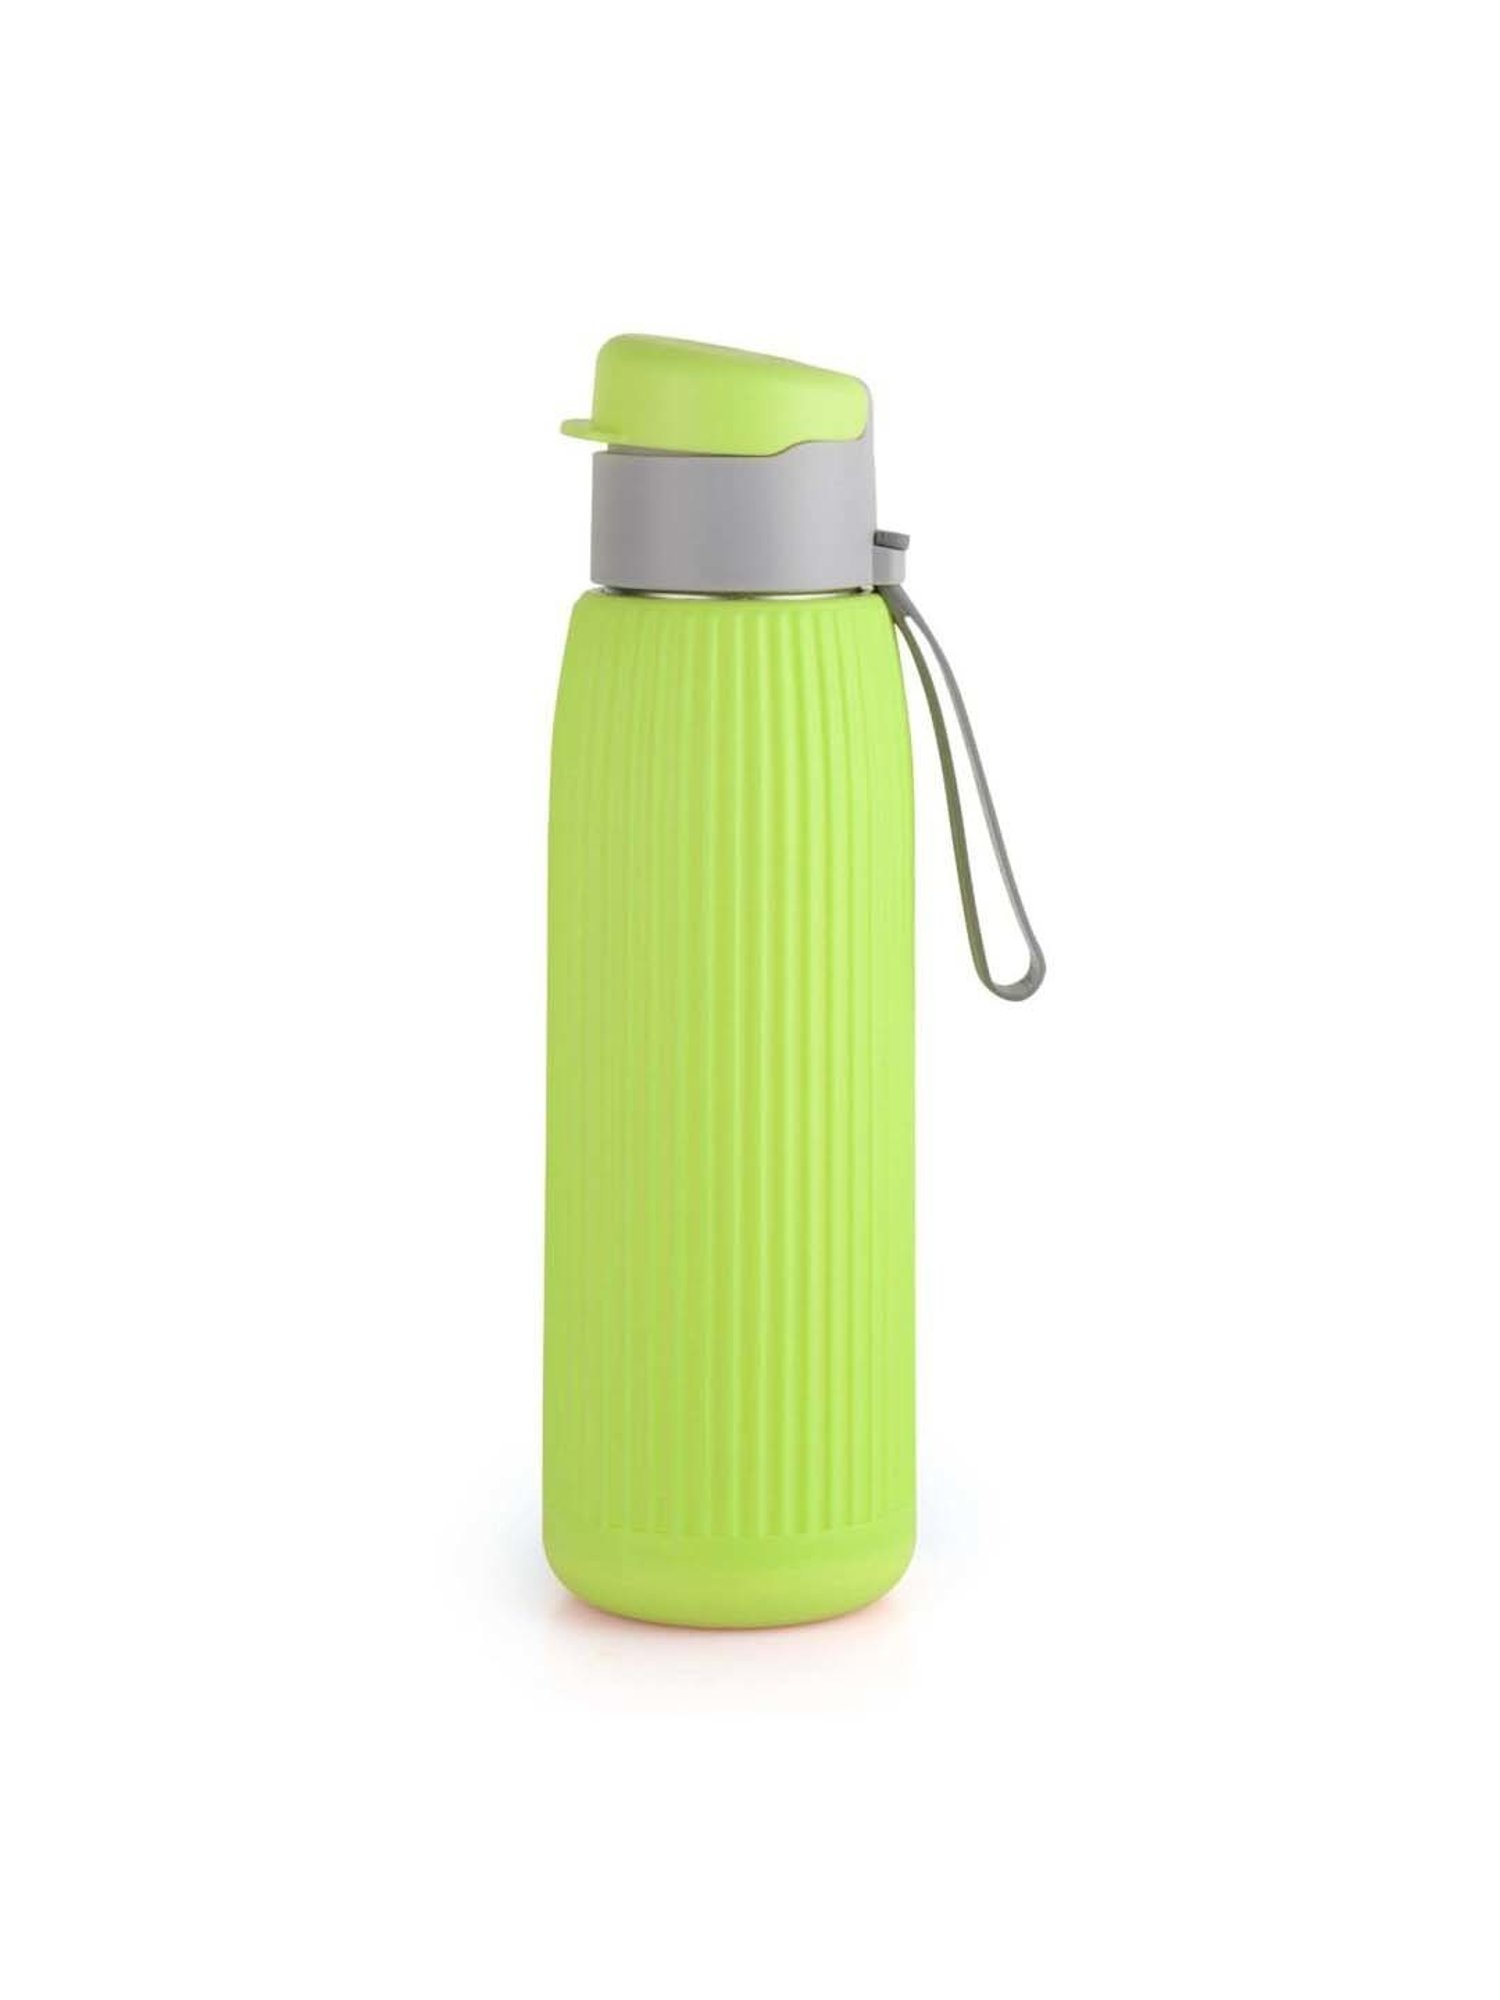 Buy Cello Green Steel Water Bottle (0.9 L) - Set of 1 at Best